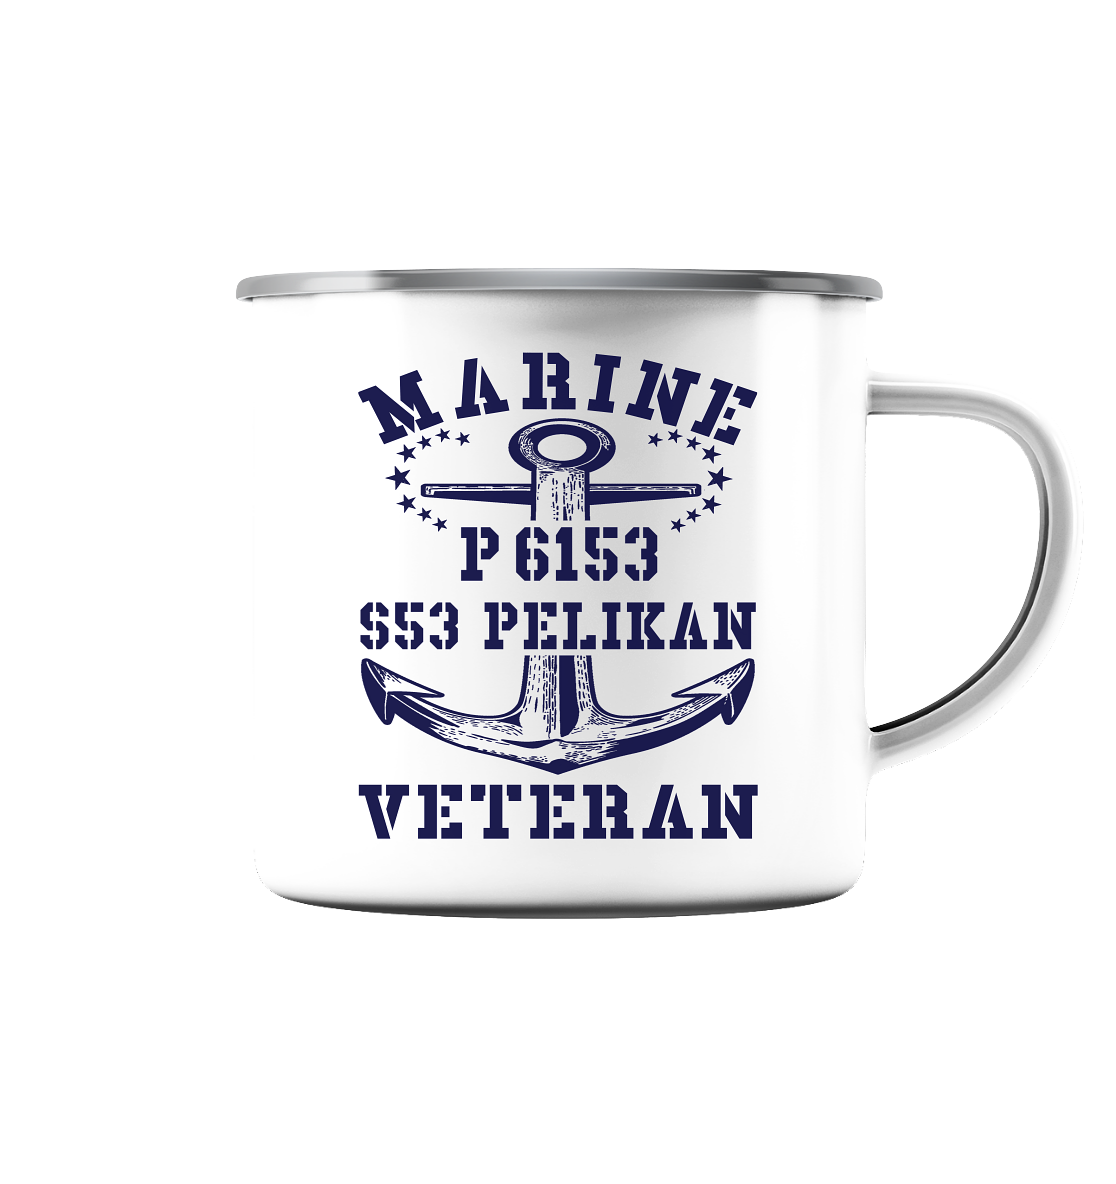 P6153 S53 PELIKAN Marine Veteran - Emaille Tasse (Silber)